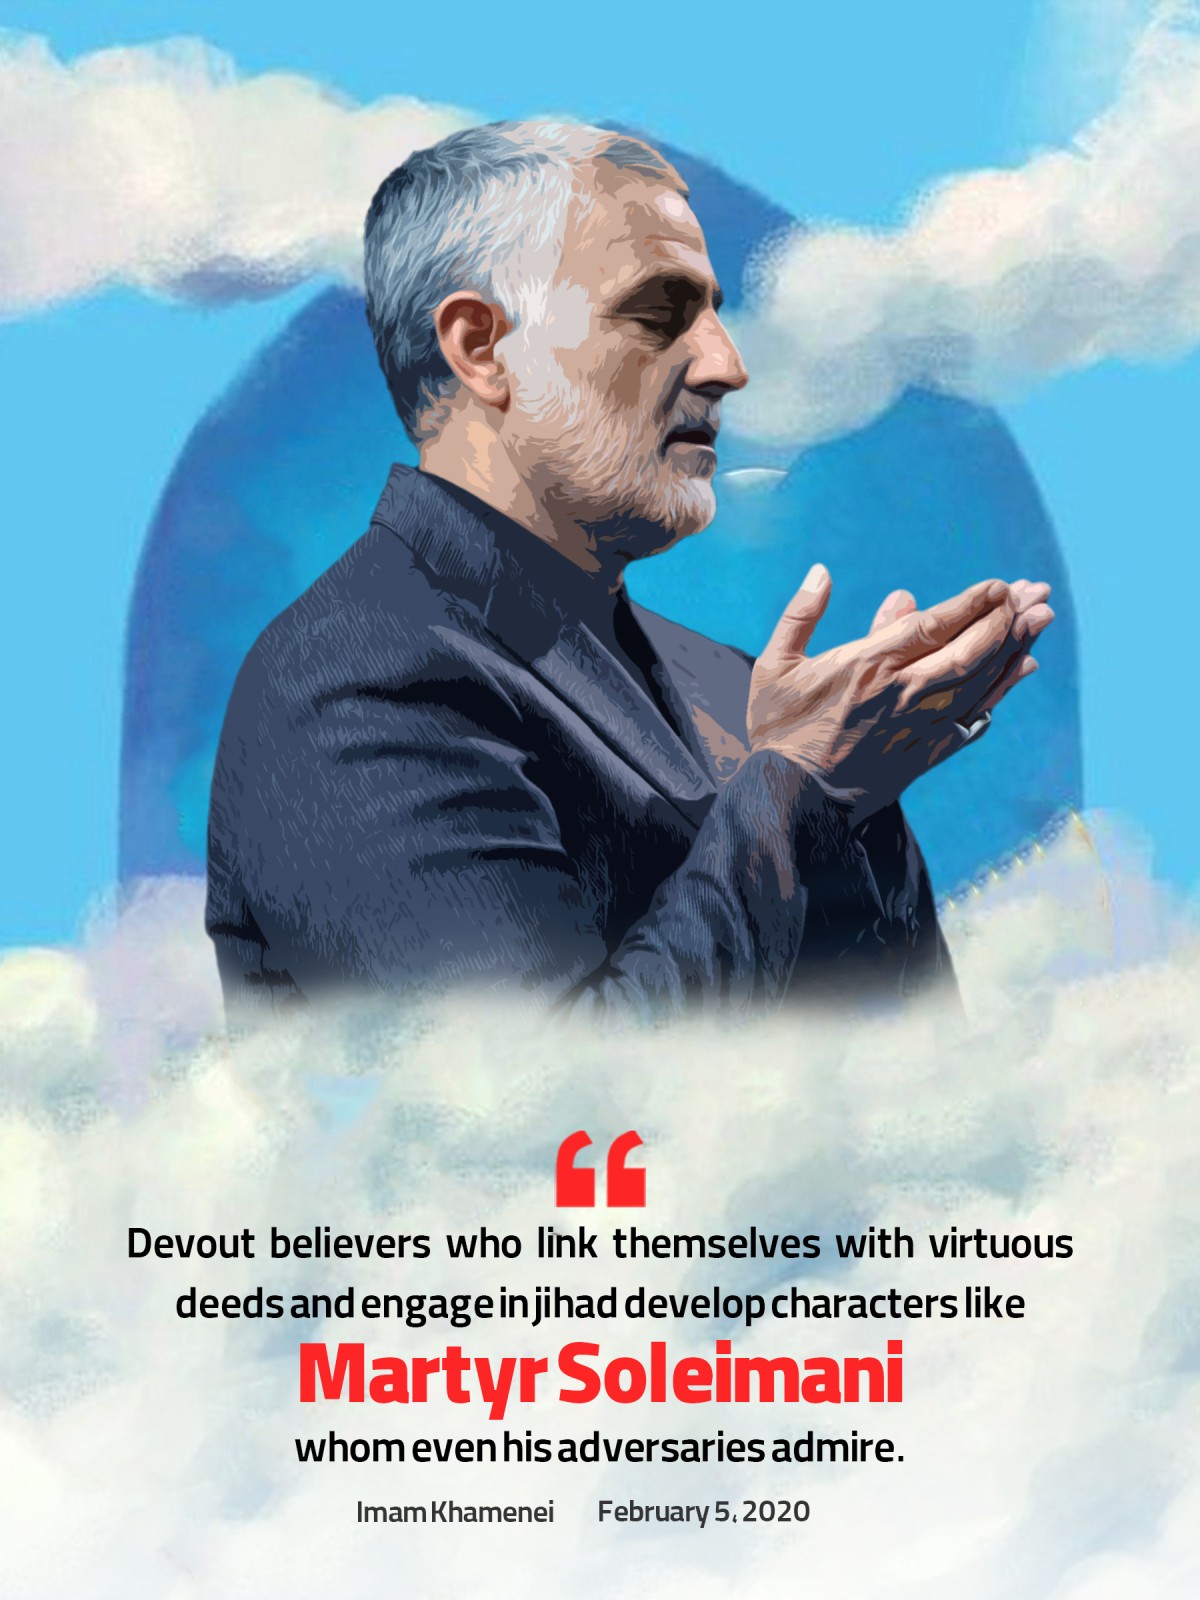  Martyr Soleimani